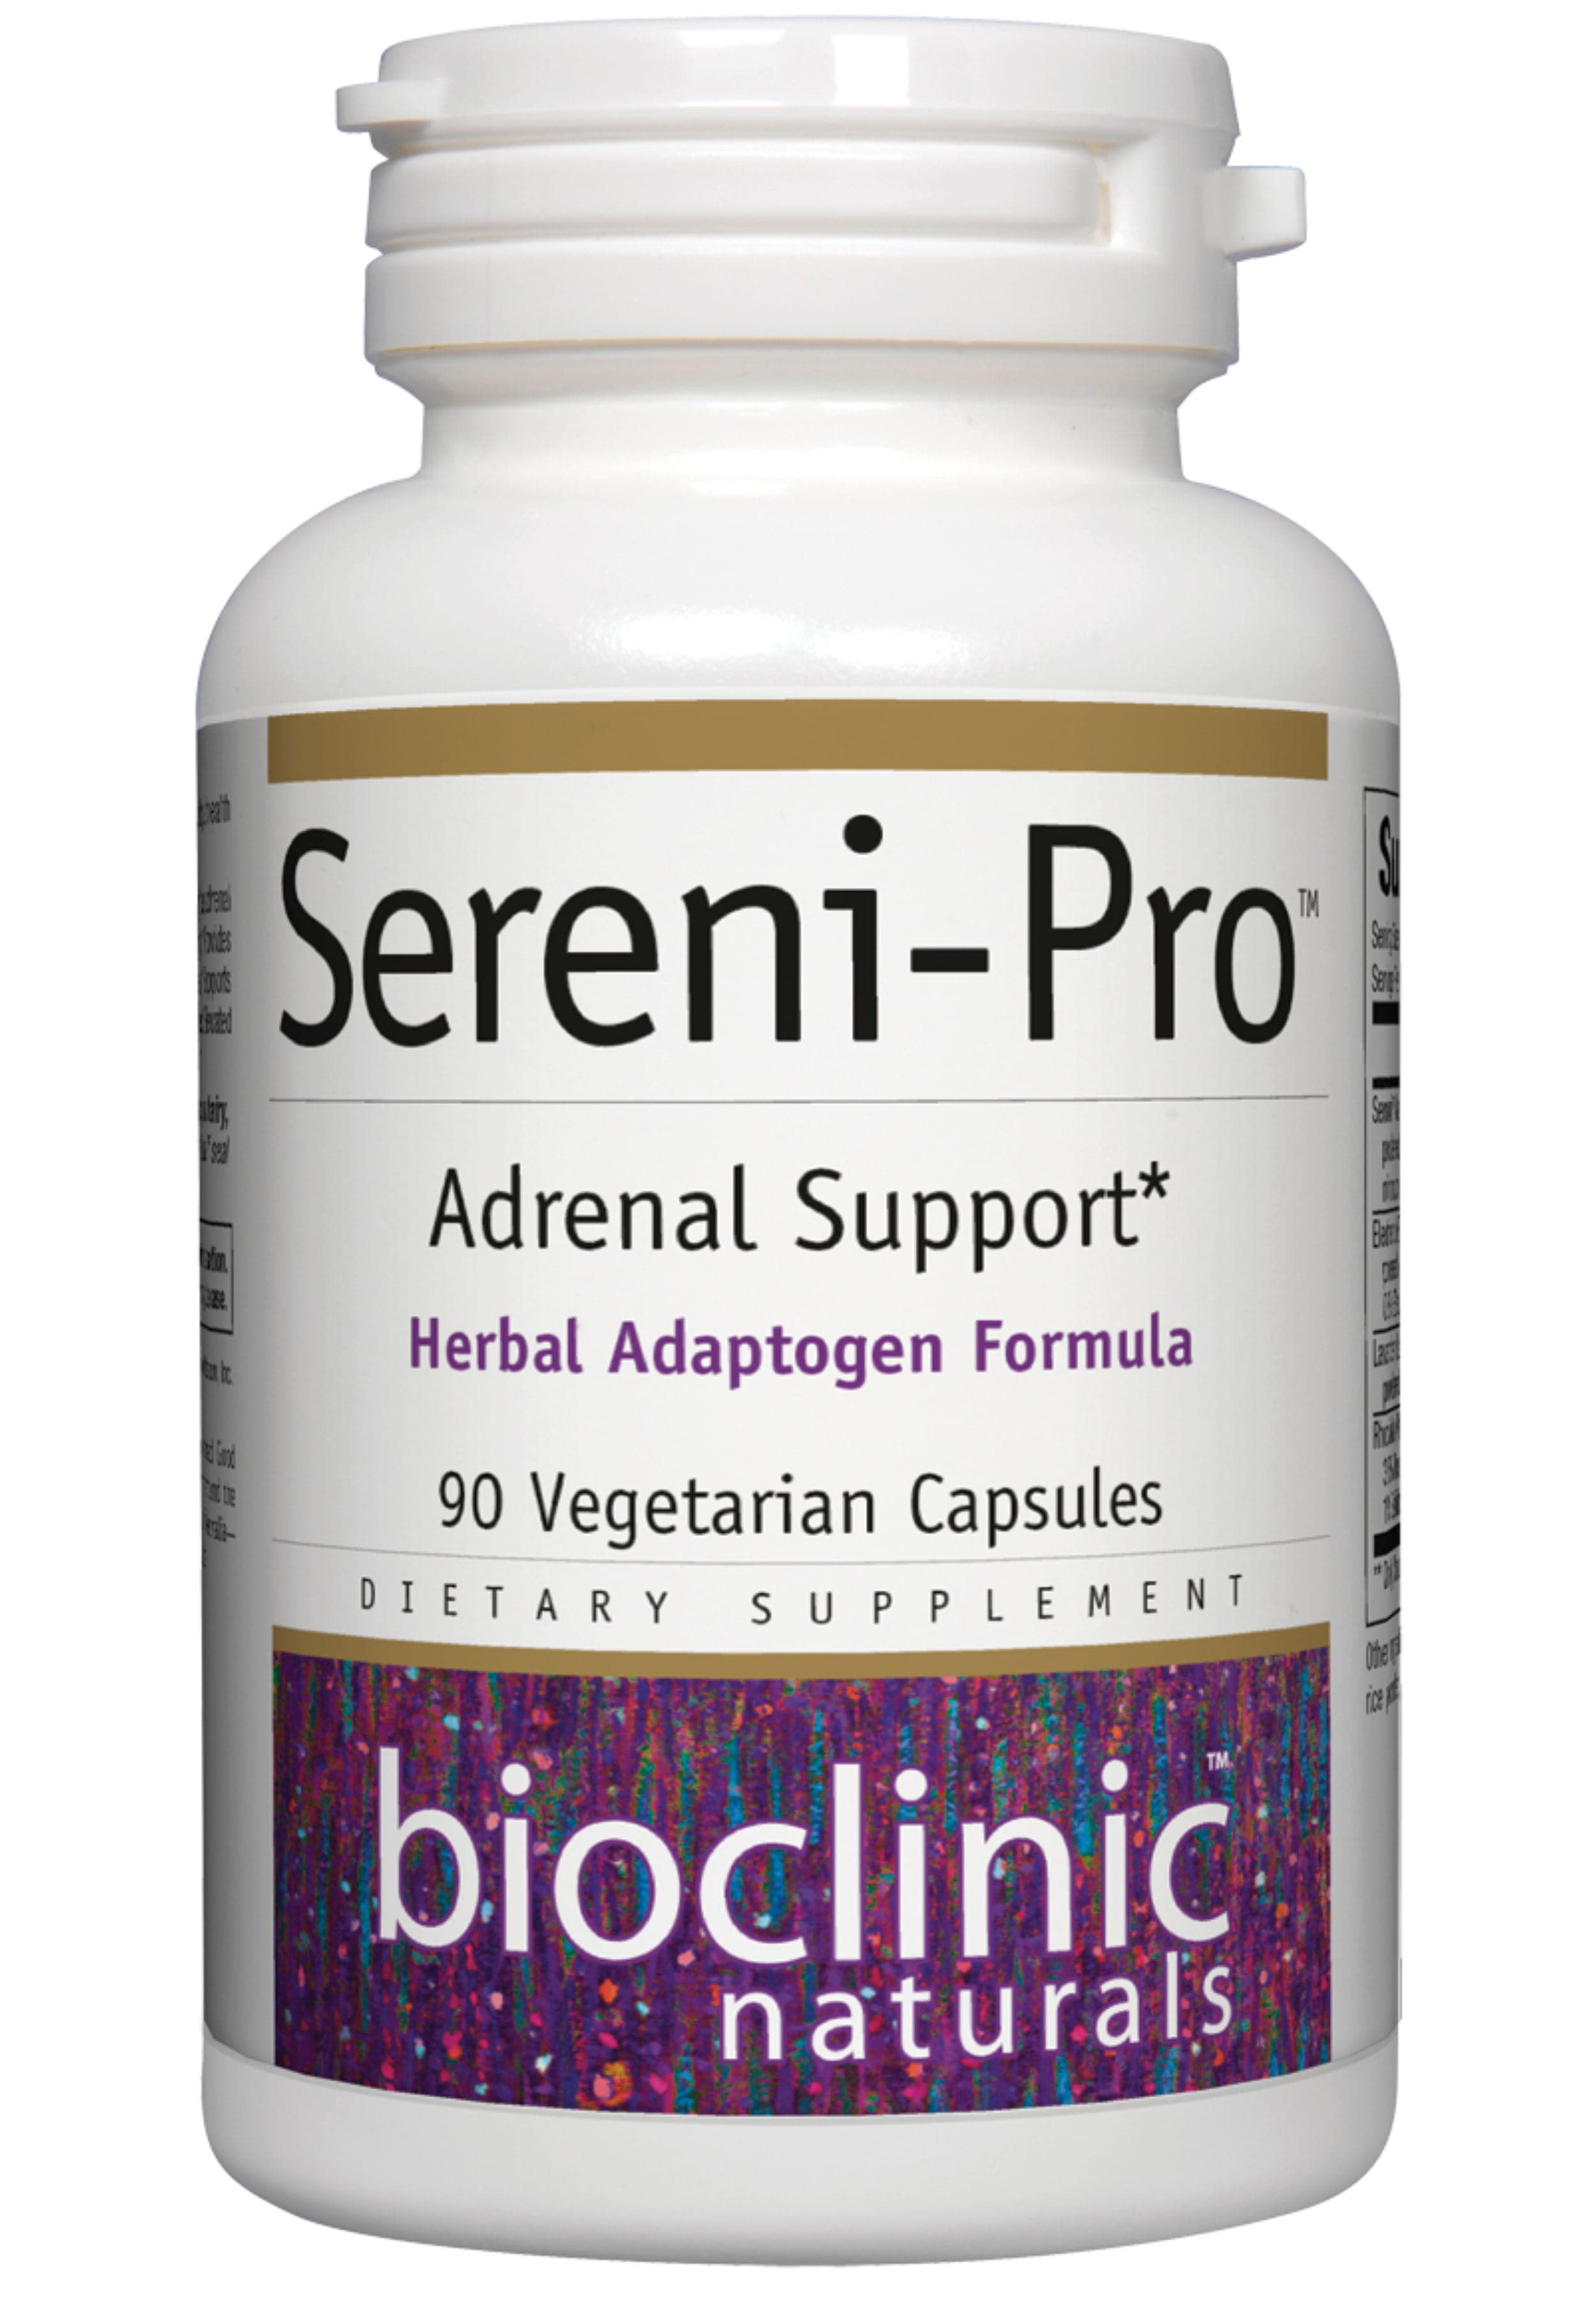 Bioclinic Naturals Sereni-Pro